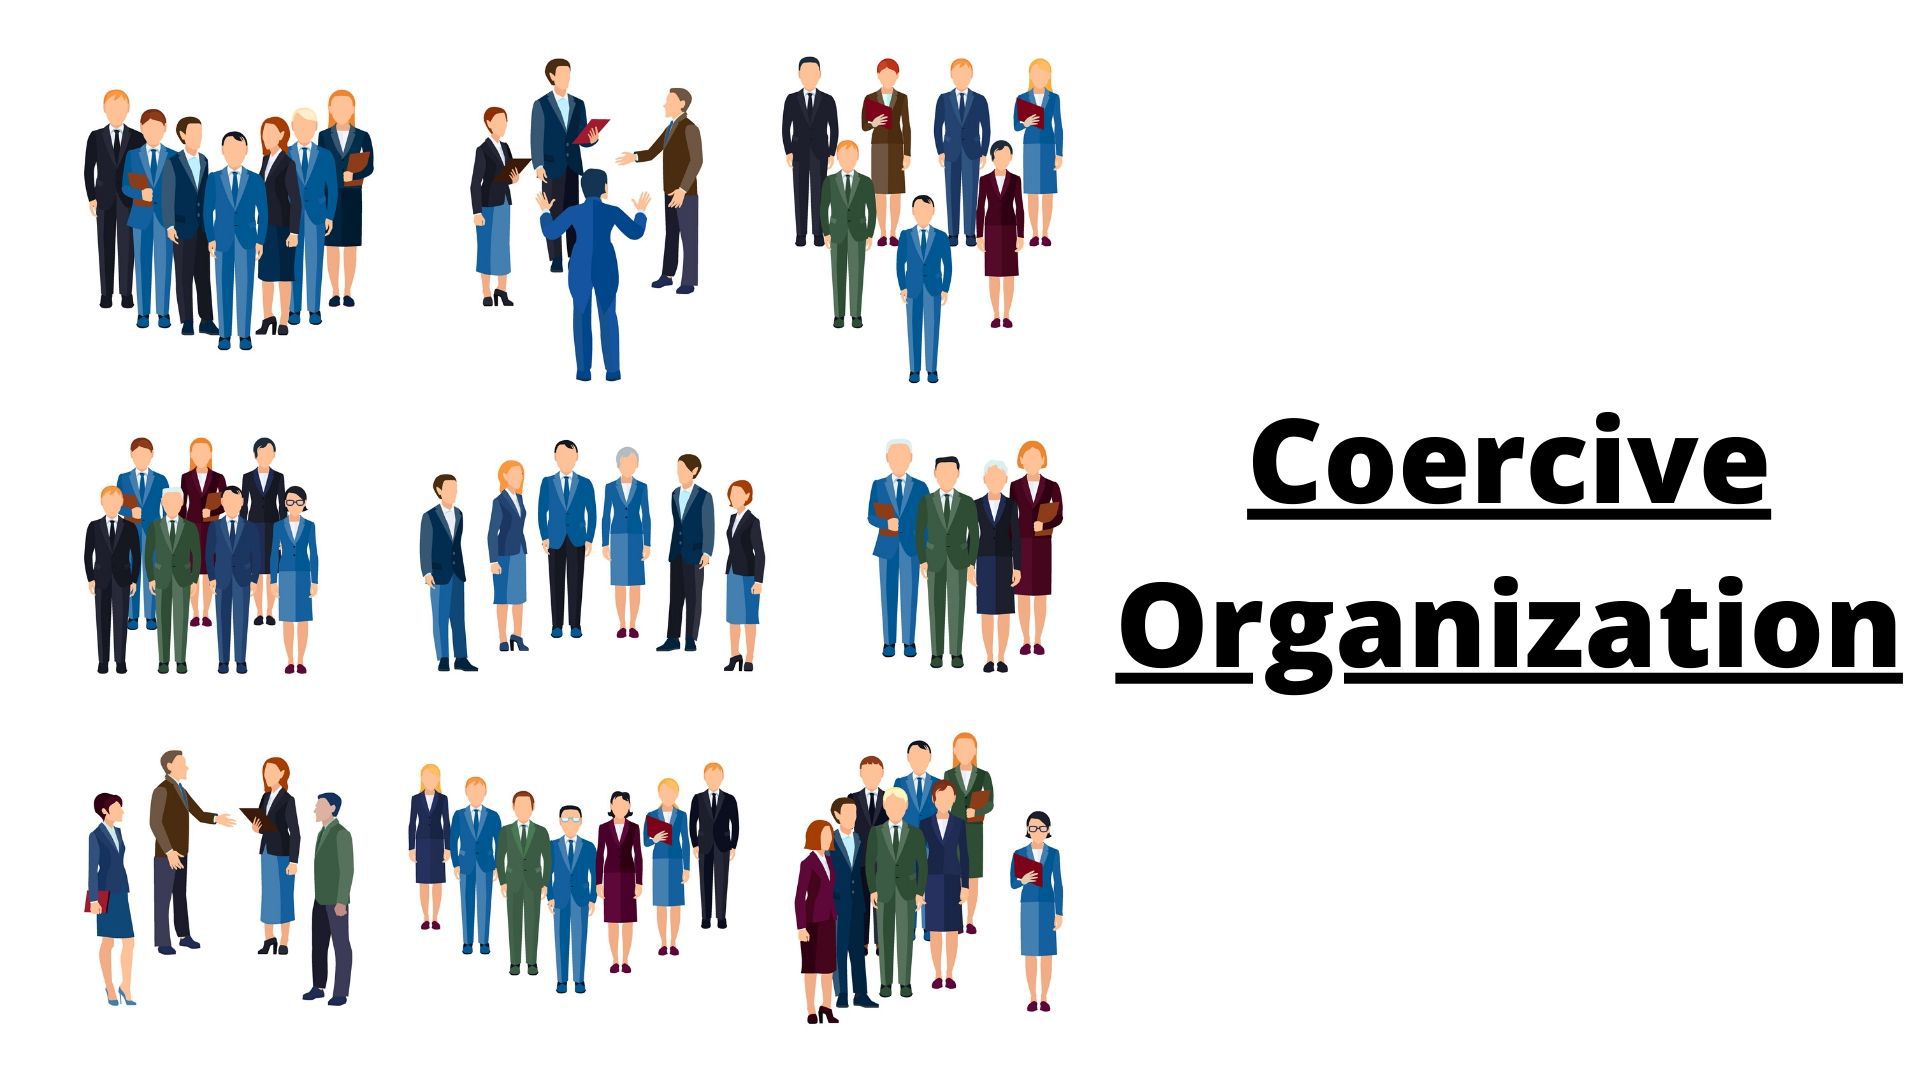 Coercive Organization